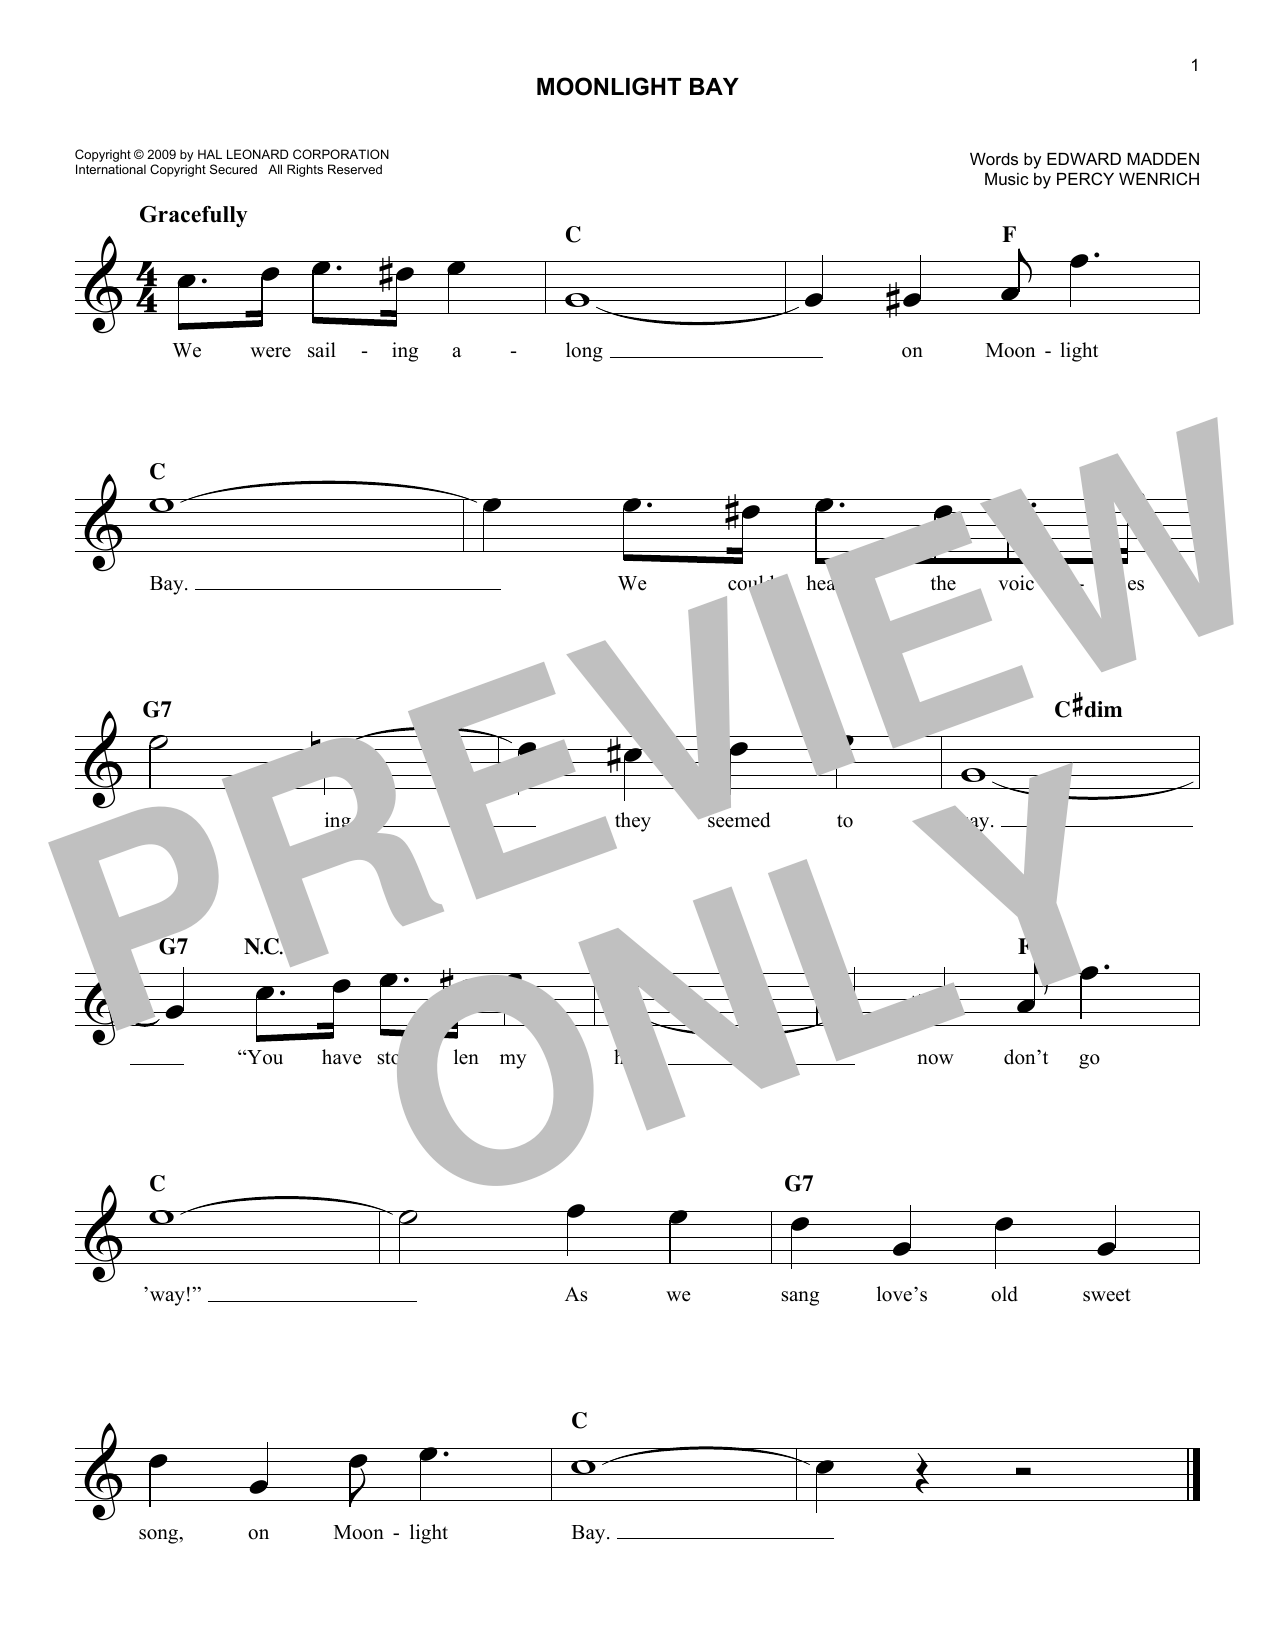 Edward Madden Moonlight Bay Sheet Music Notes & Chords for Melody Line, Lyrics & Chords - Download or Print PDF